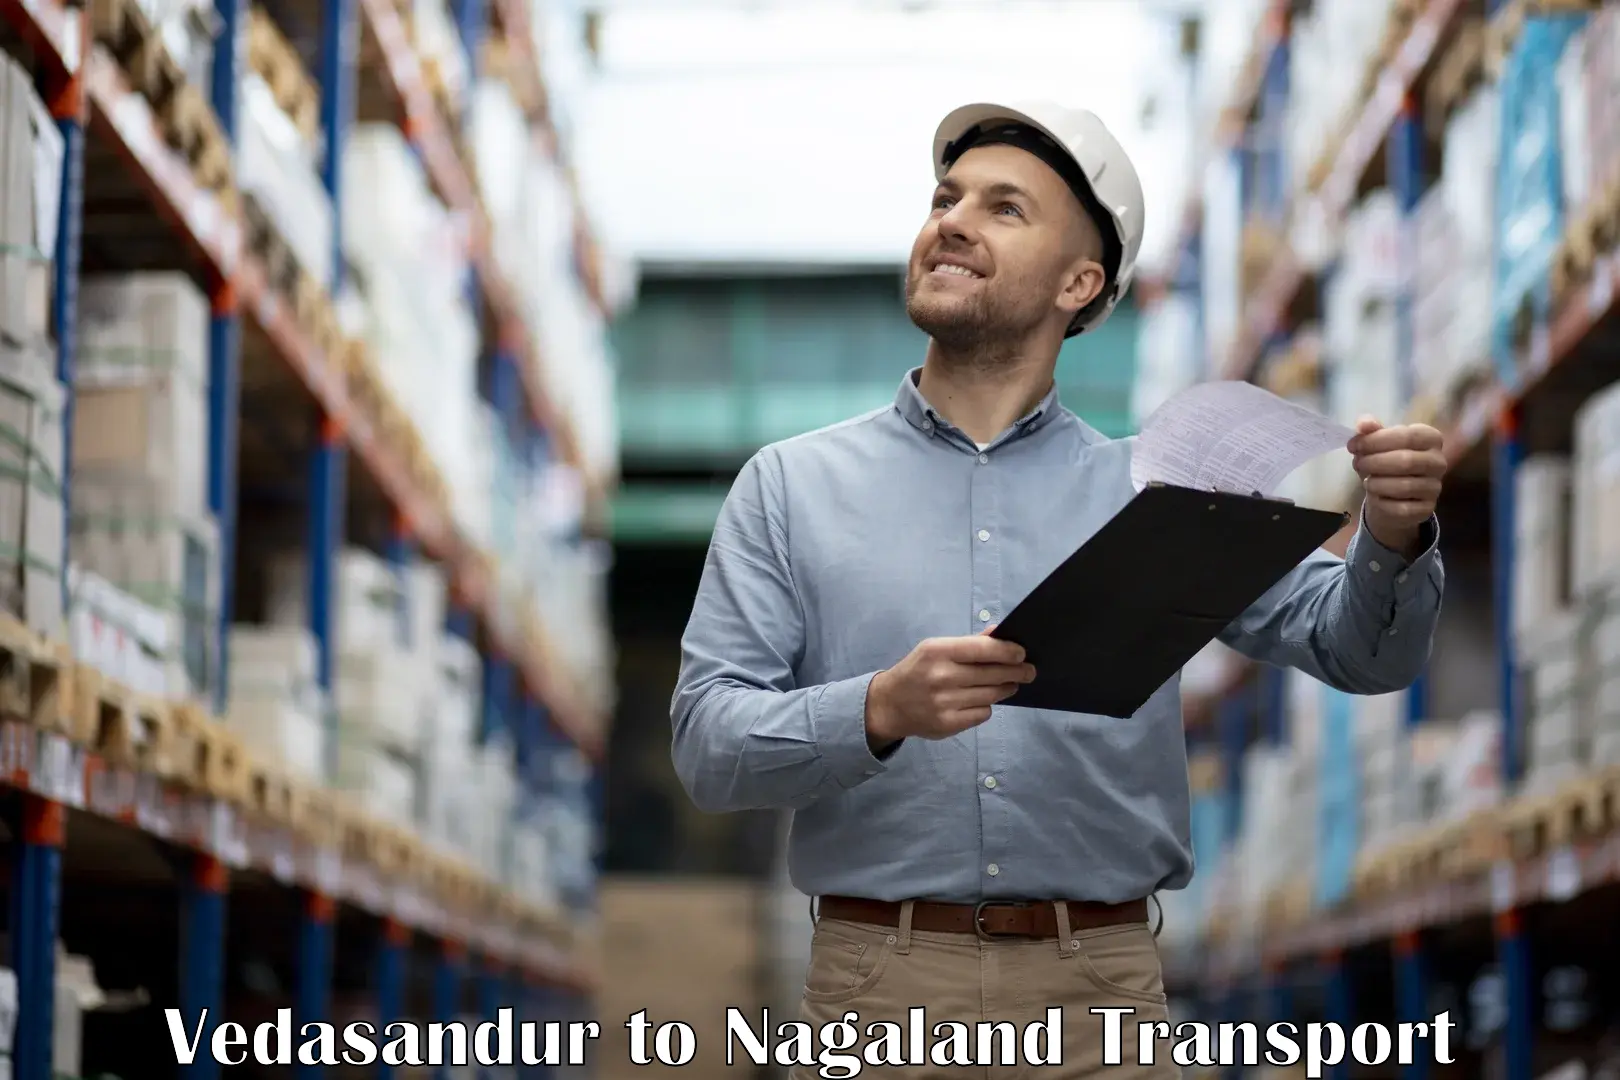 Nearby transport service Vedasandur to Nagaland